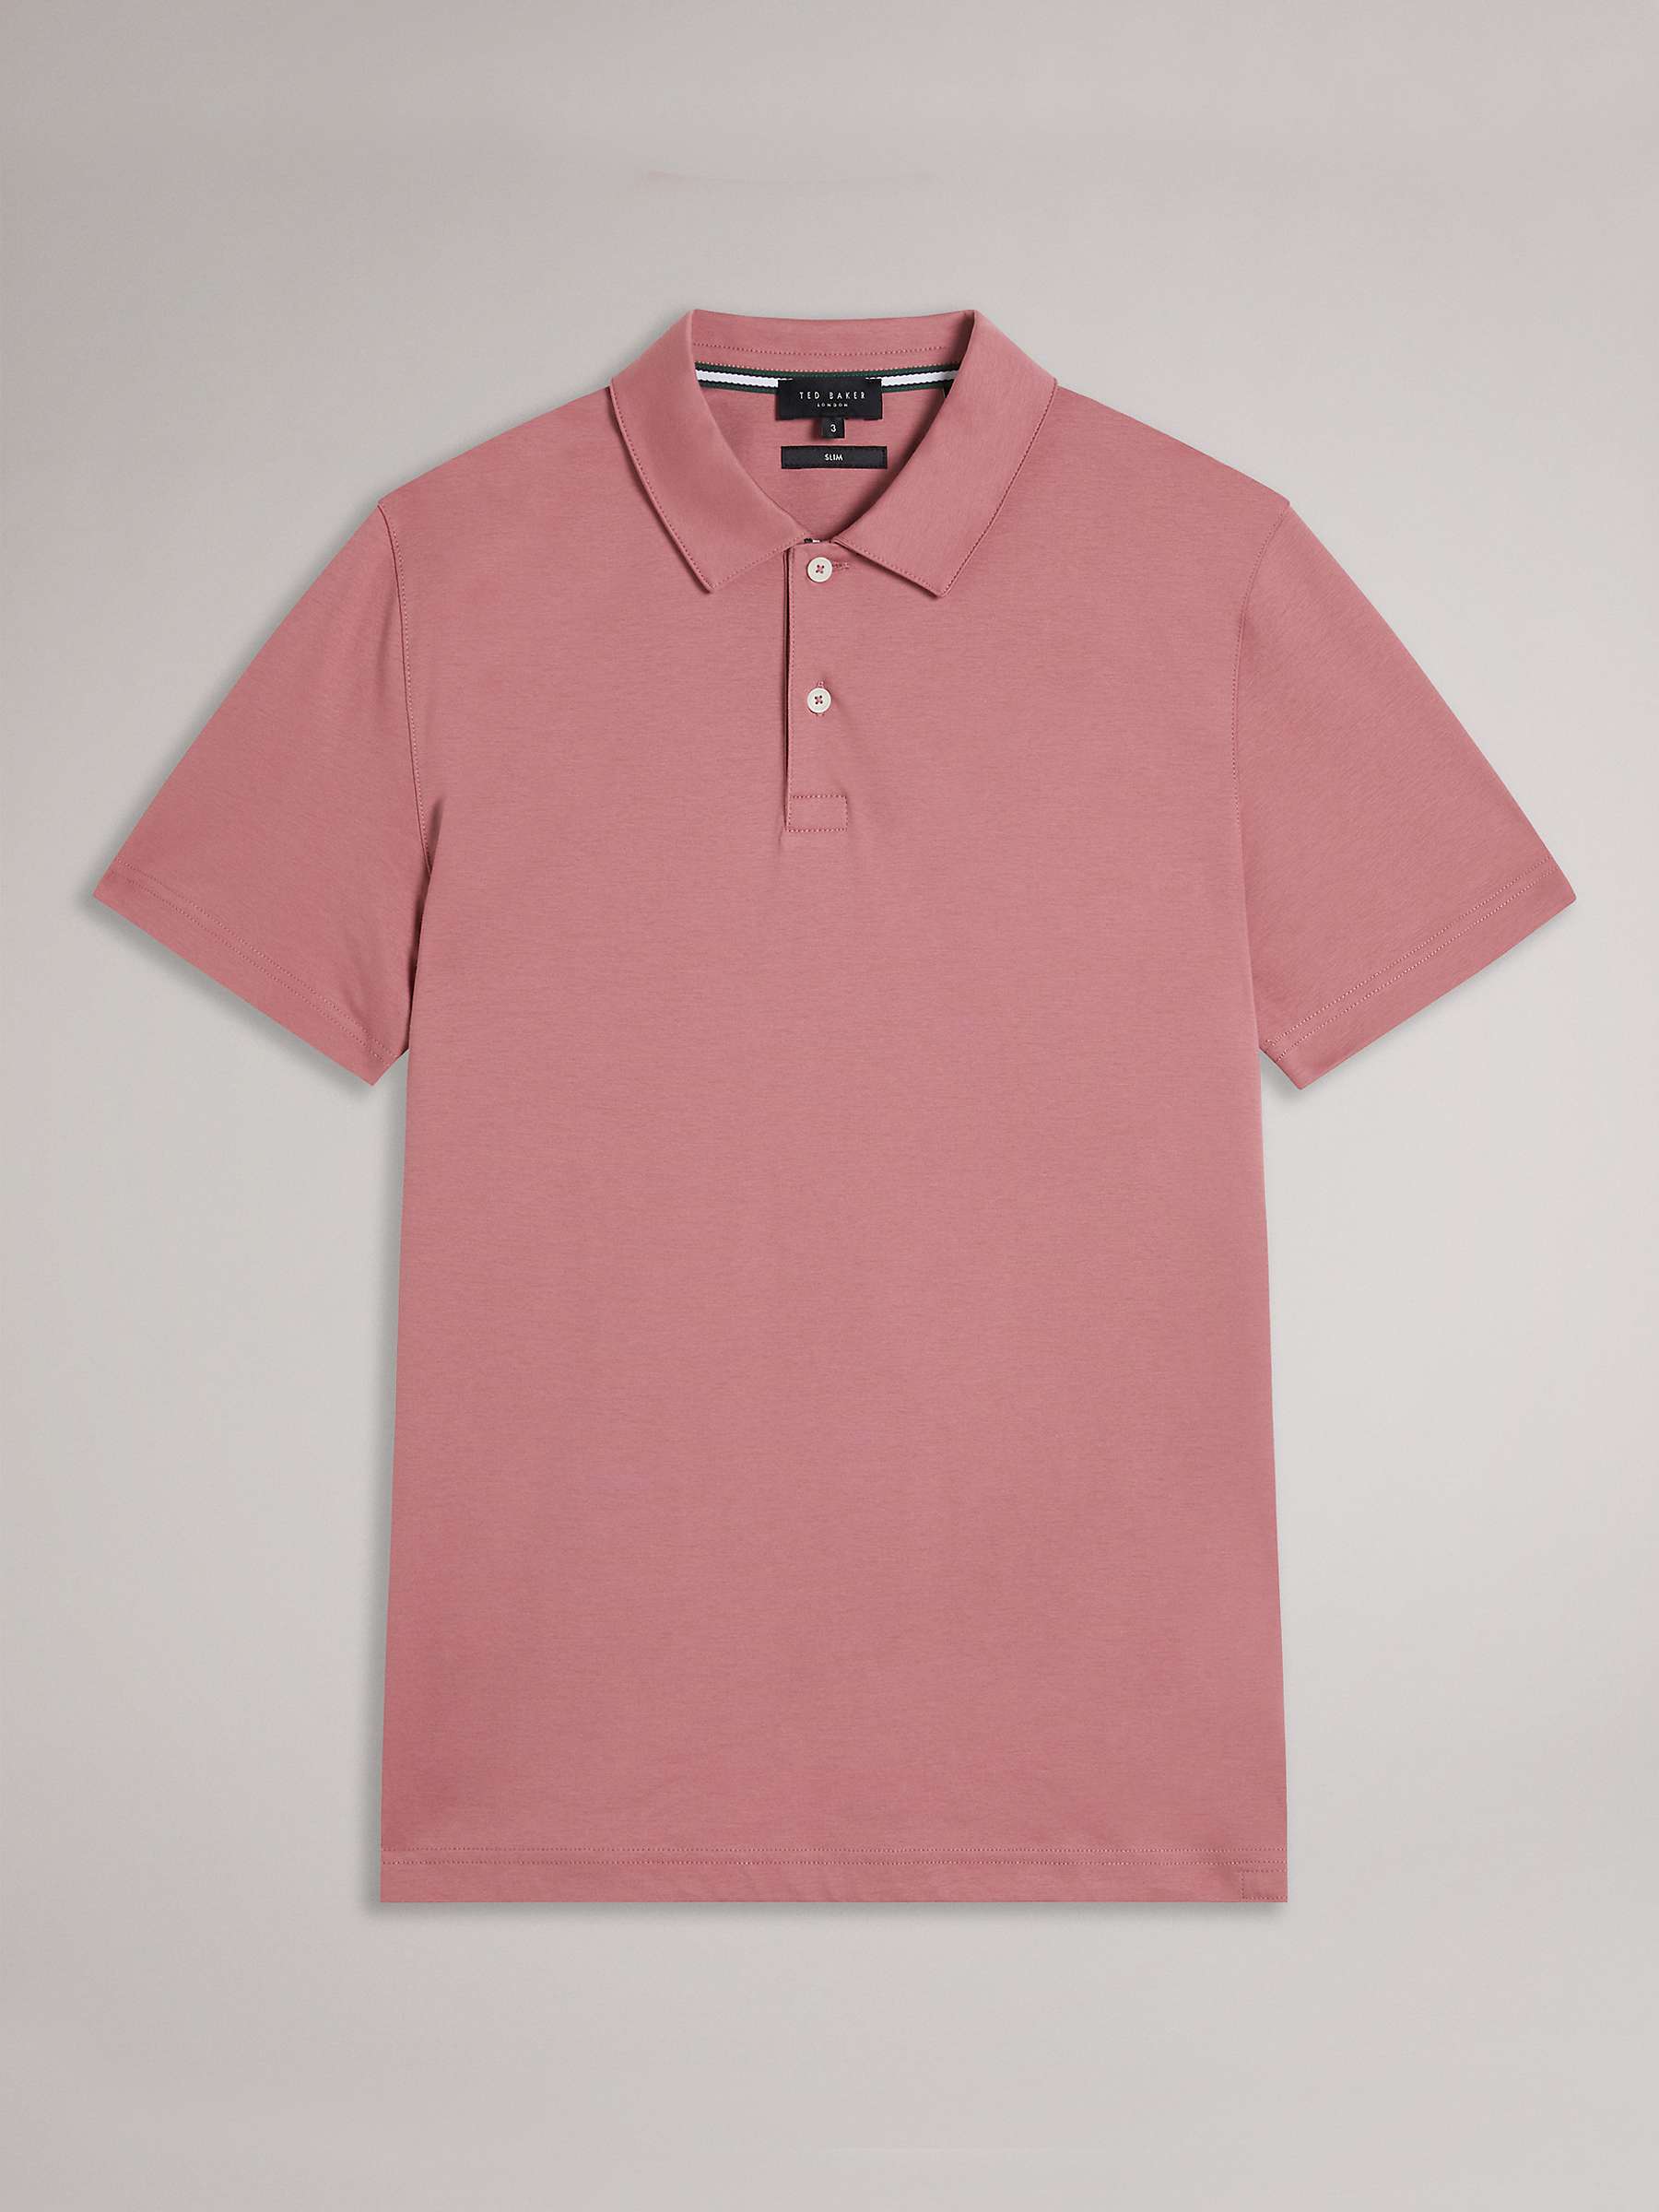 Buy Ted Baker Zeiter Jersey Polo Short Sleeve Shirt Online at johnlewis.com